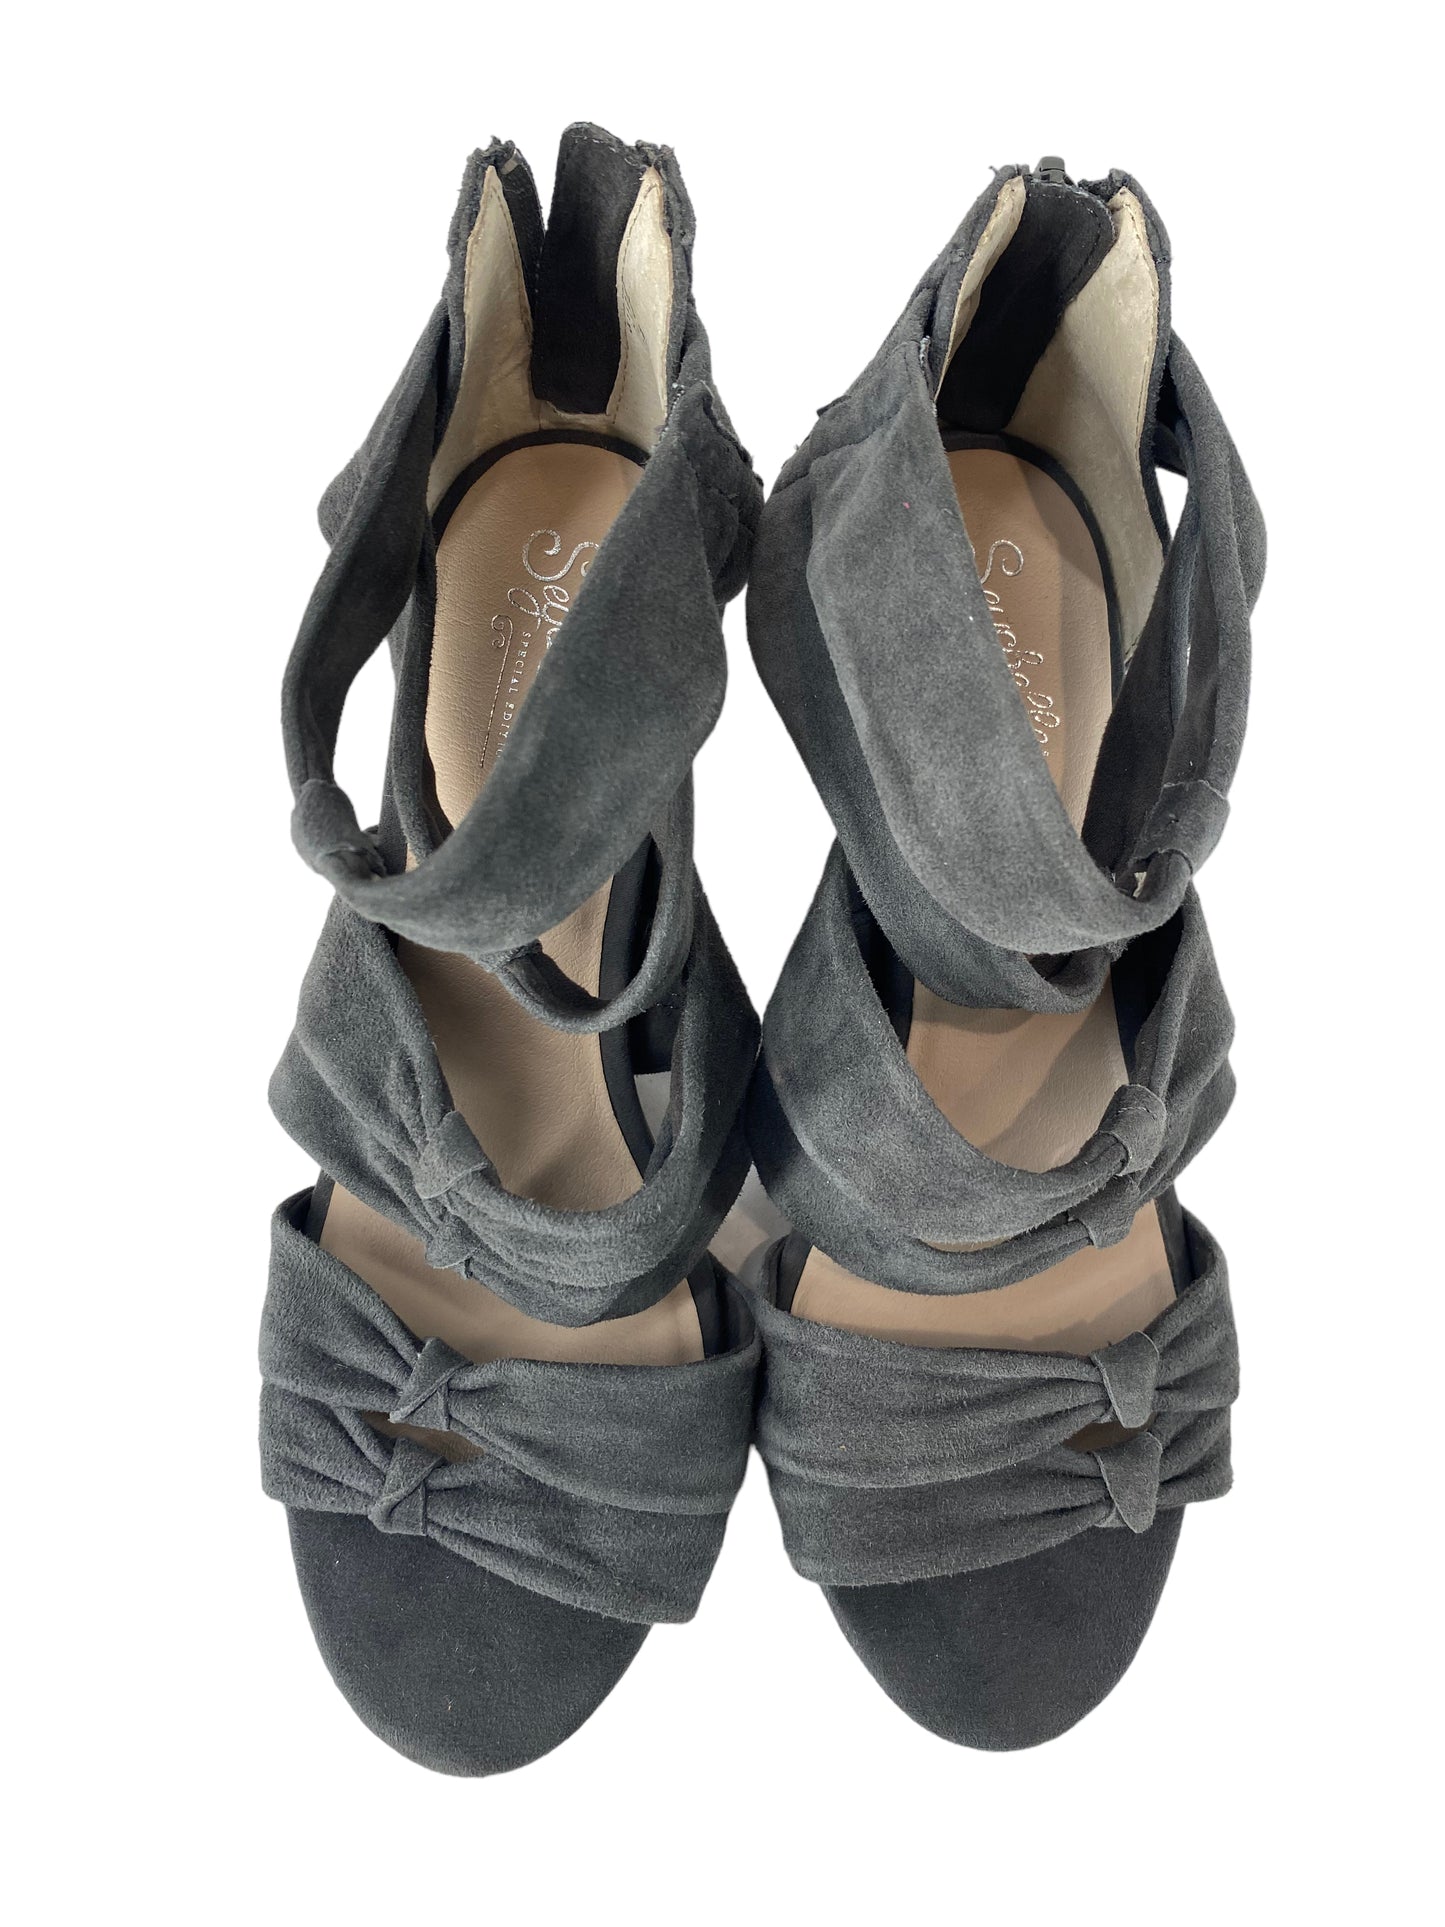 Shoes Heels Block By Seychelles  Size: 8